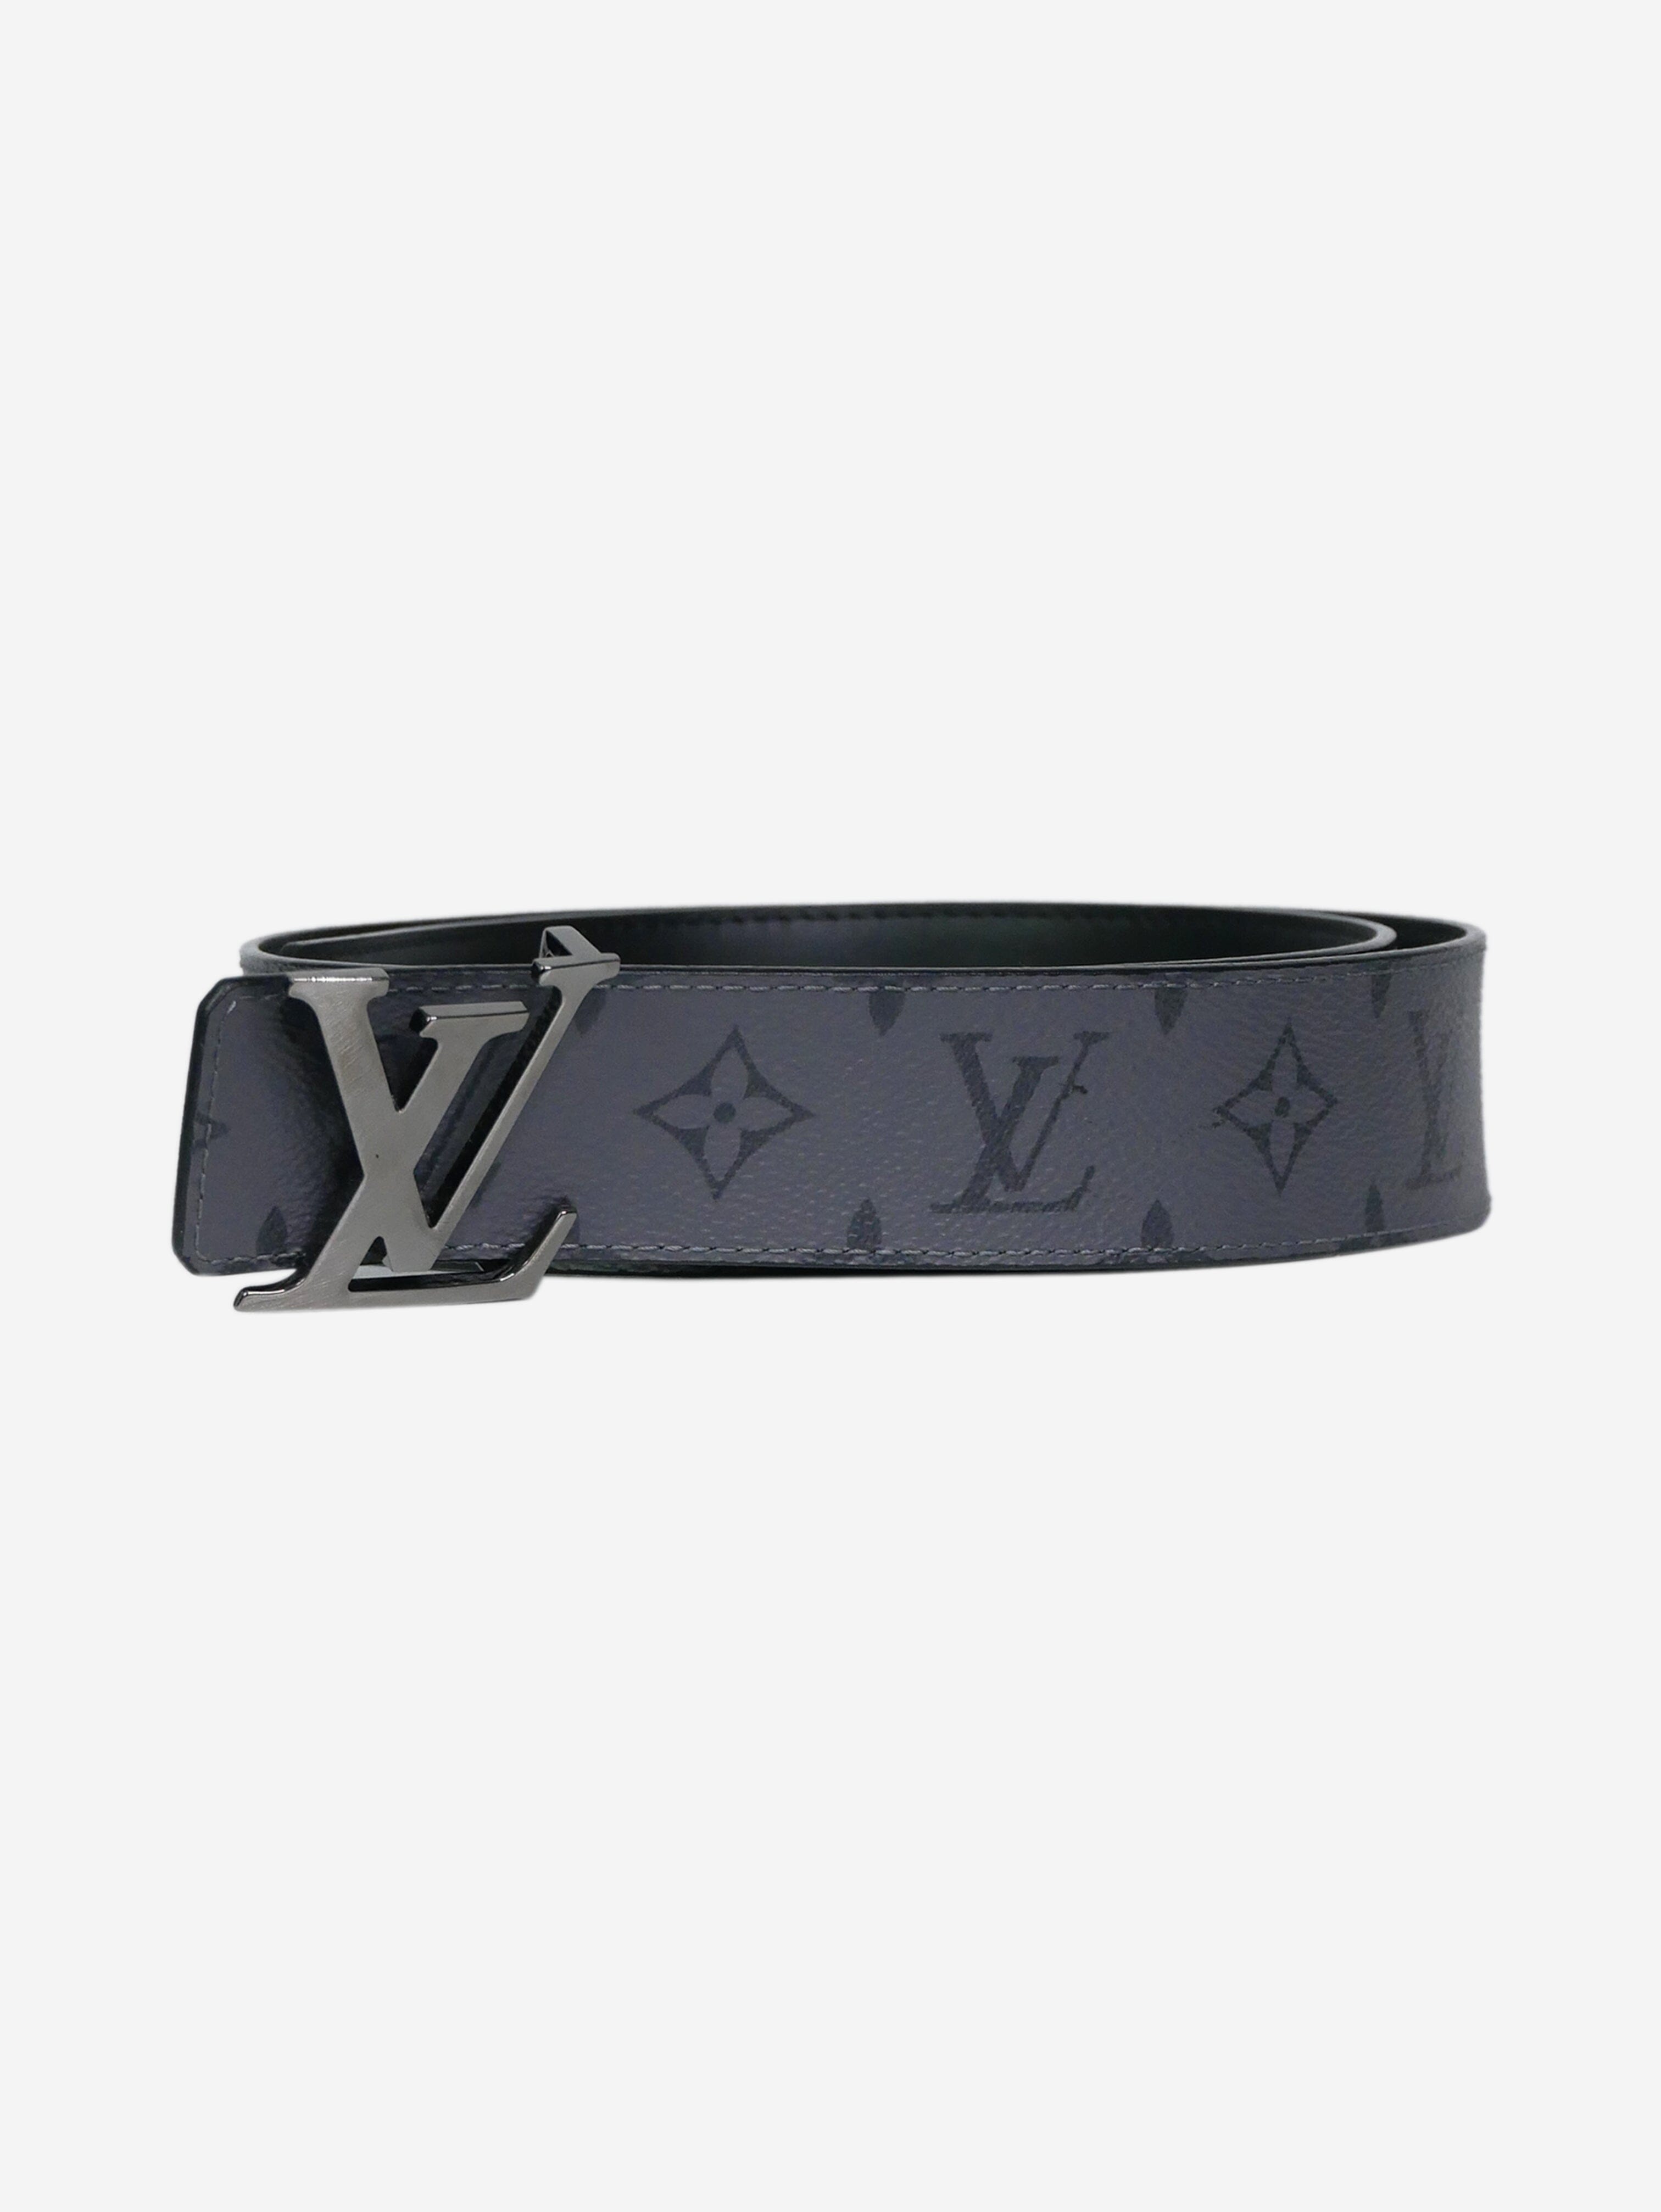 Grey pre-owned Louis Vuitton Monogram belt